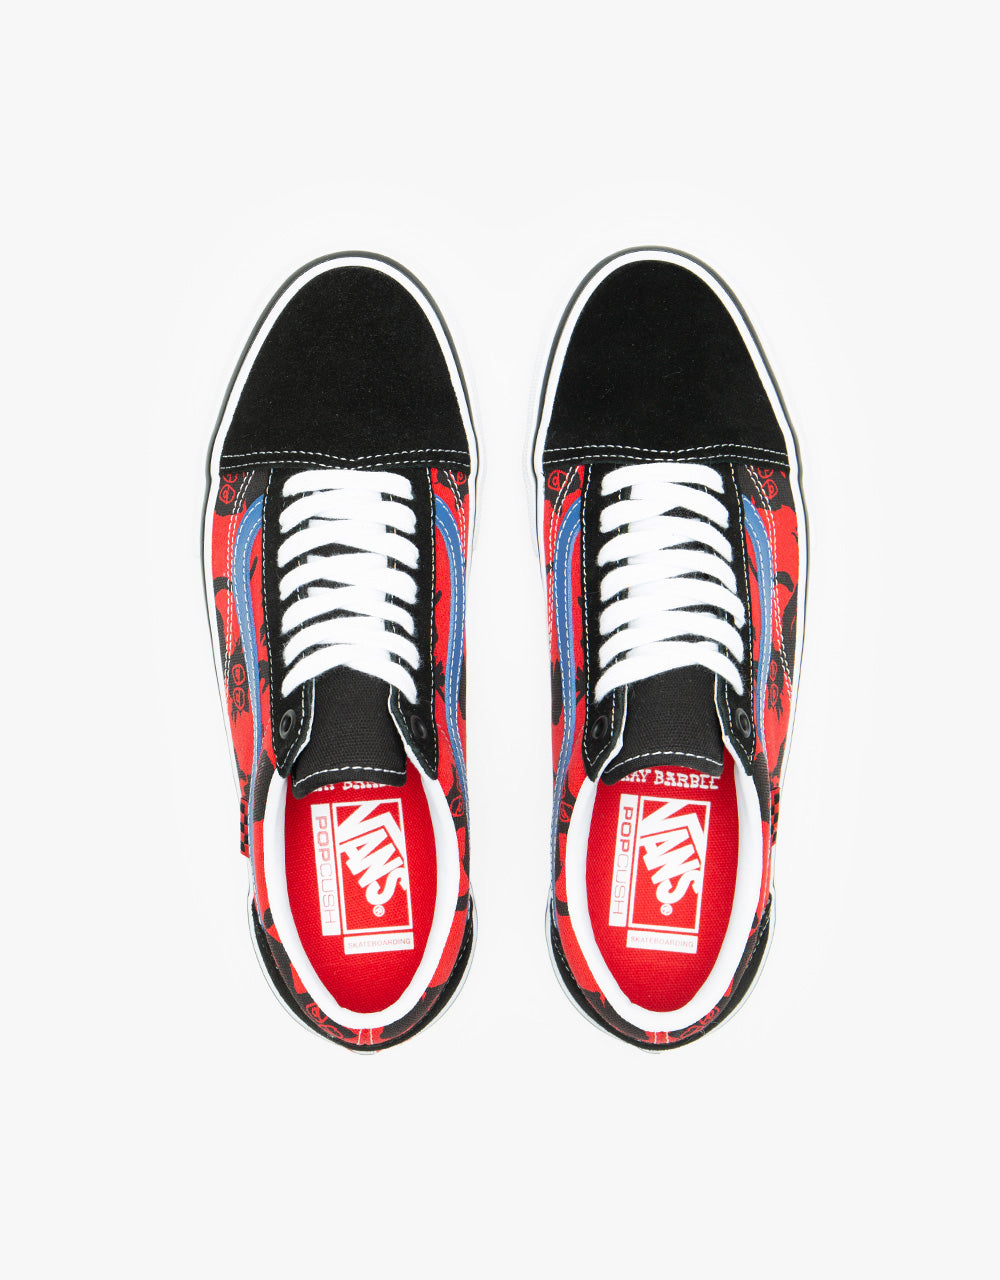 Vans Skate Old Skool Skate Shoes - (Krooked by Natas for Ray) Red